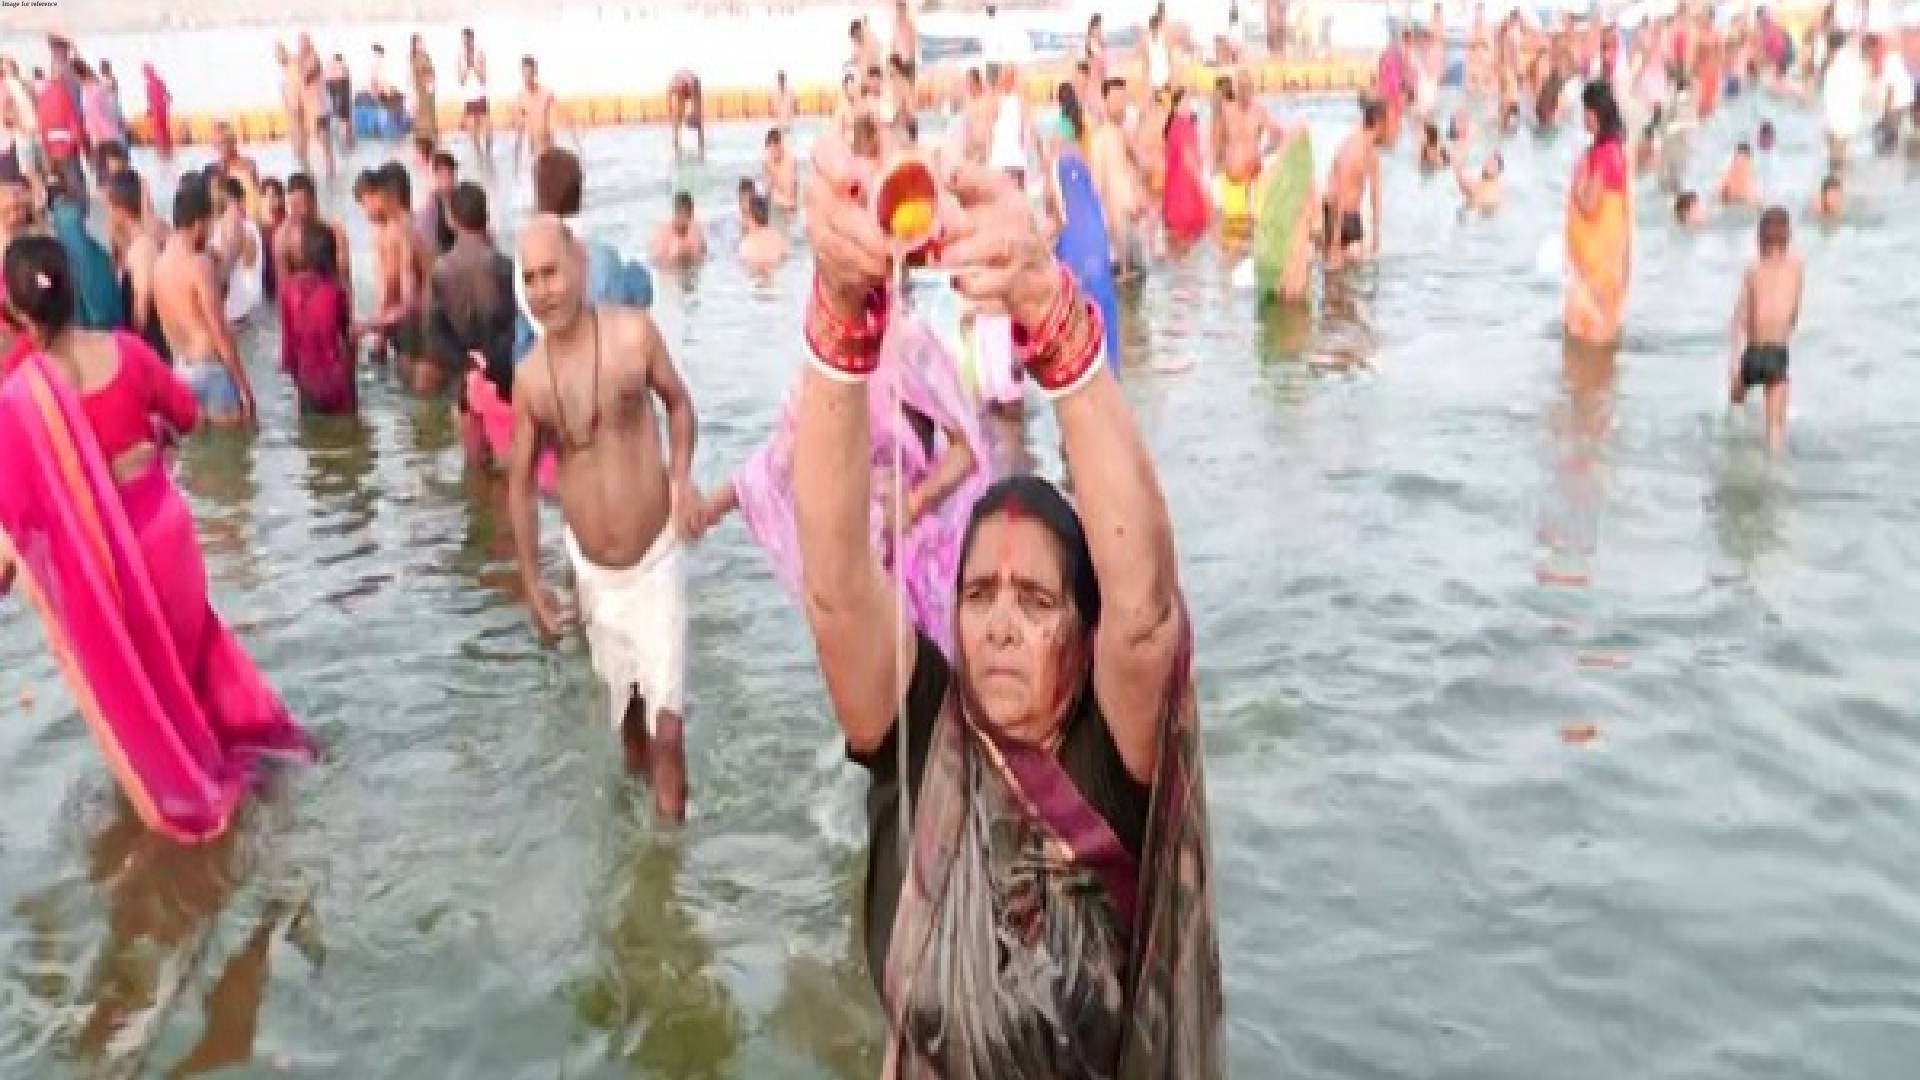 UP: Devotees take holy dip in River Ganga; offer prayers on Somvati Amavasya at Prayagraj